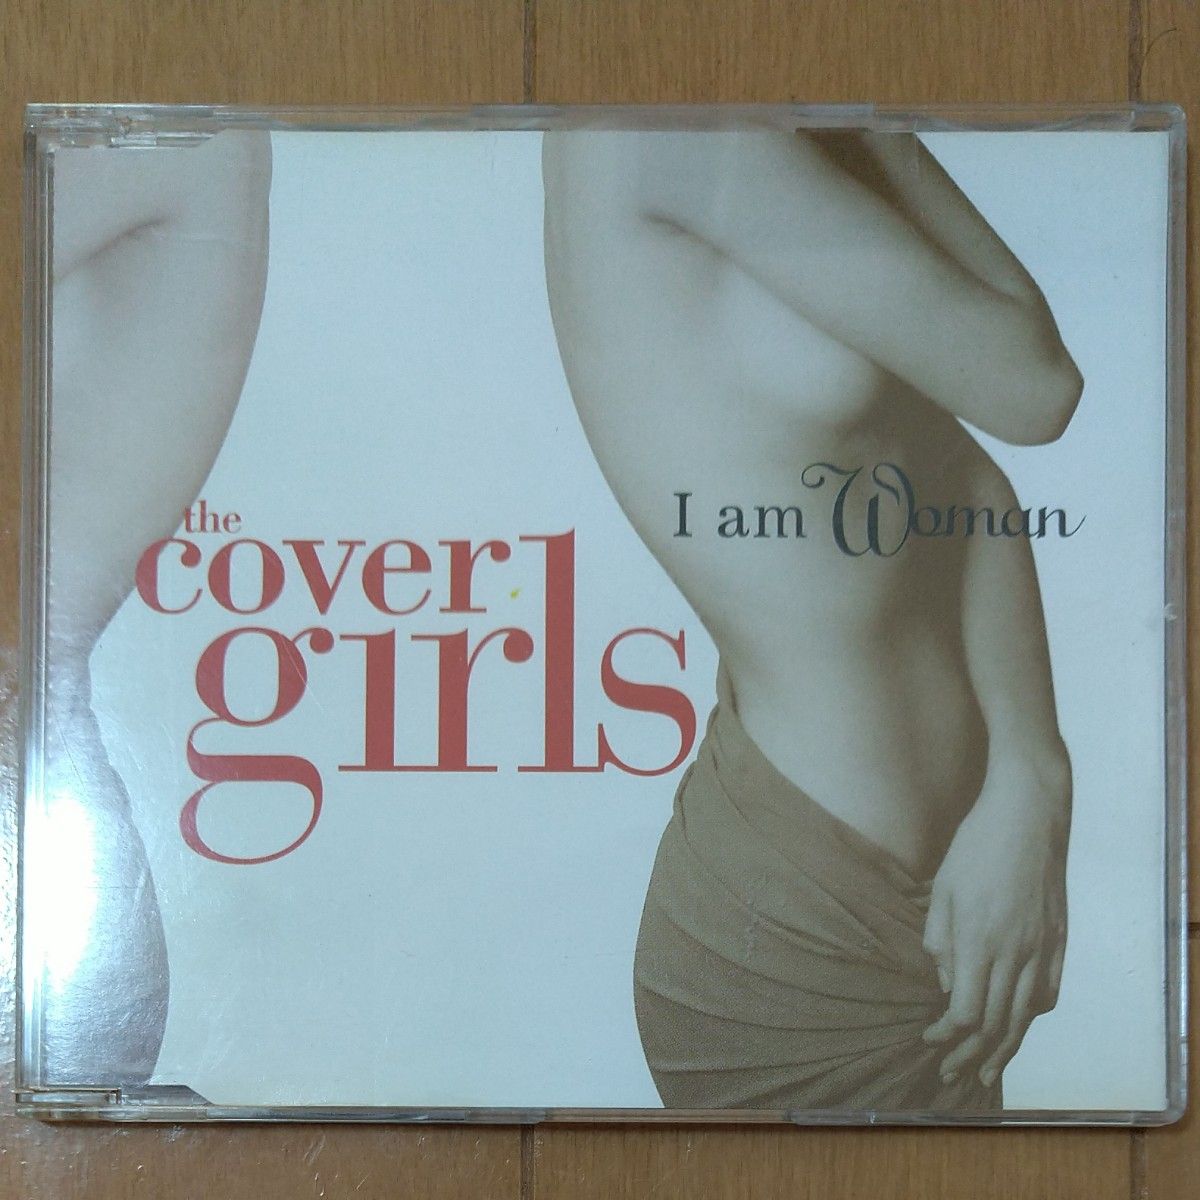 Cover Girls☆I am Woman☆Method Man&Redman☆Remix☆CD single☆Maxi☆